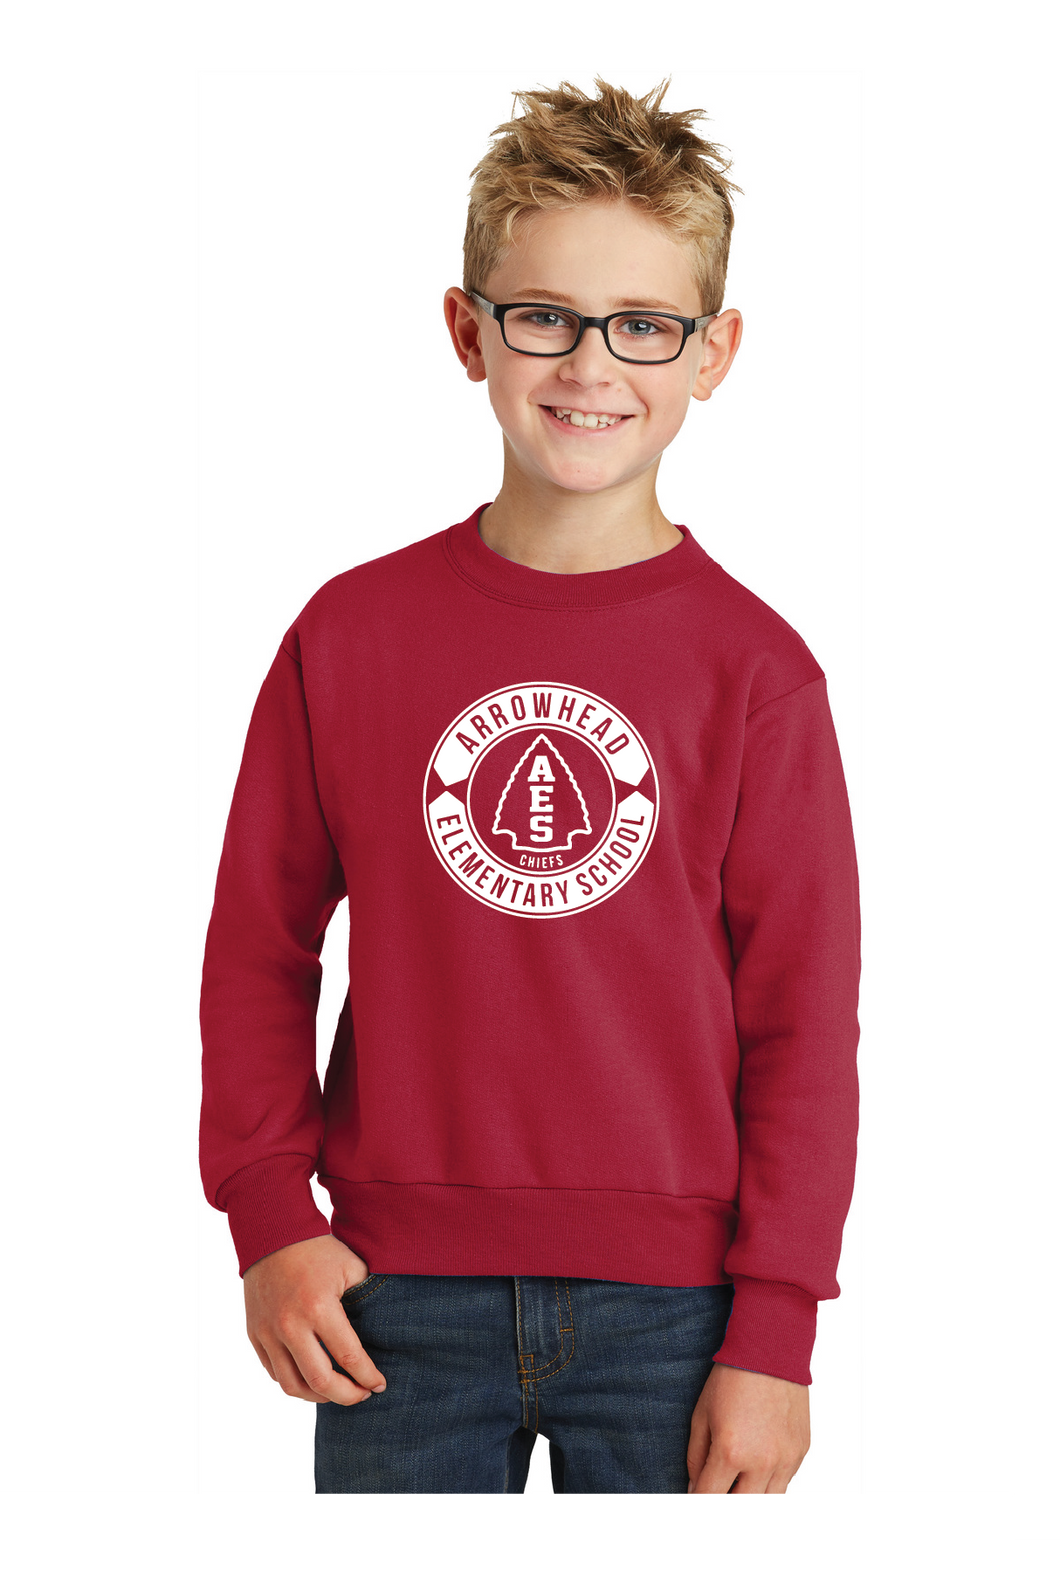 Fleece Crewneck Sweatshirt (Youth & Adult) / Red / Arrowhead Elementary